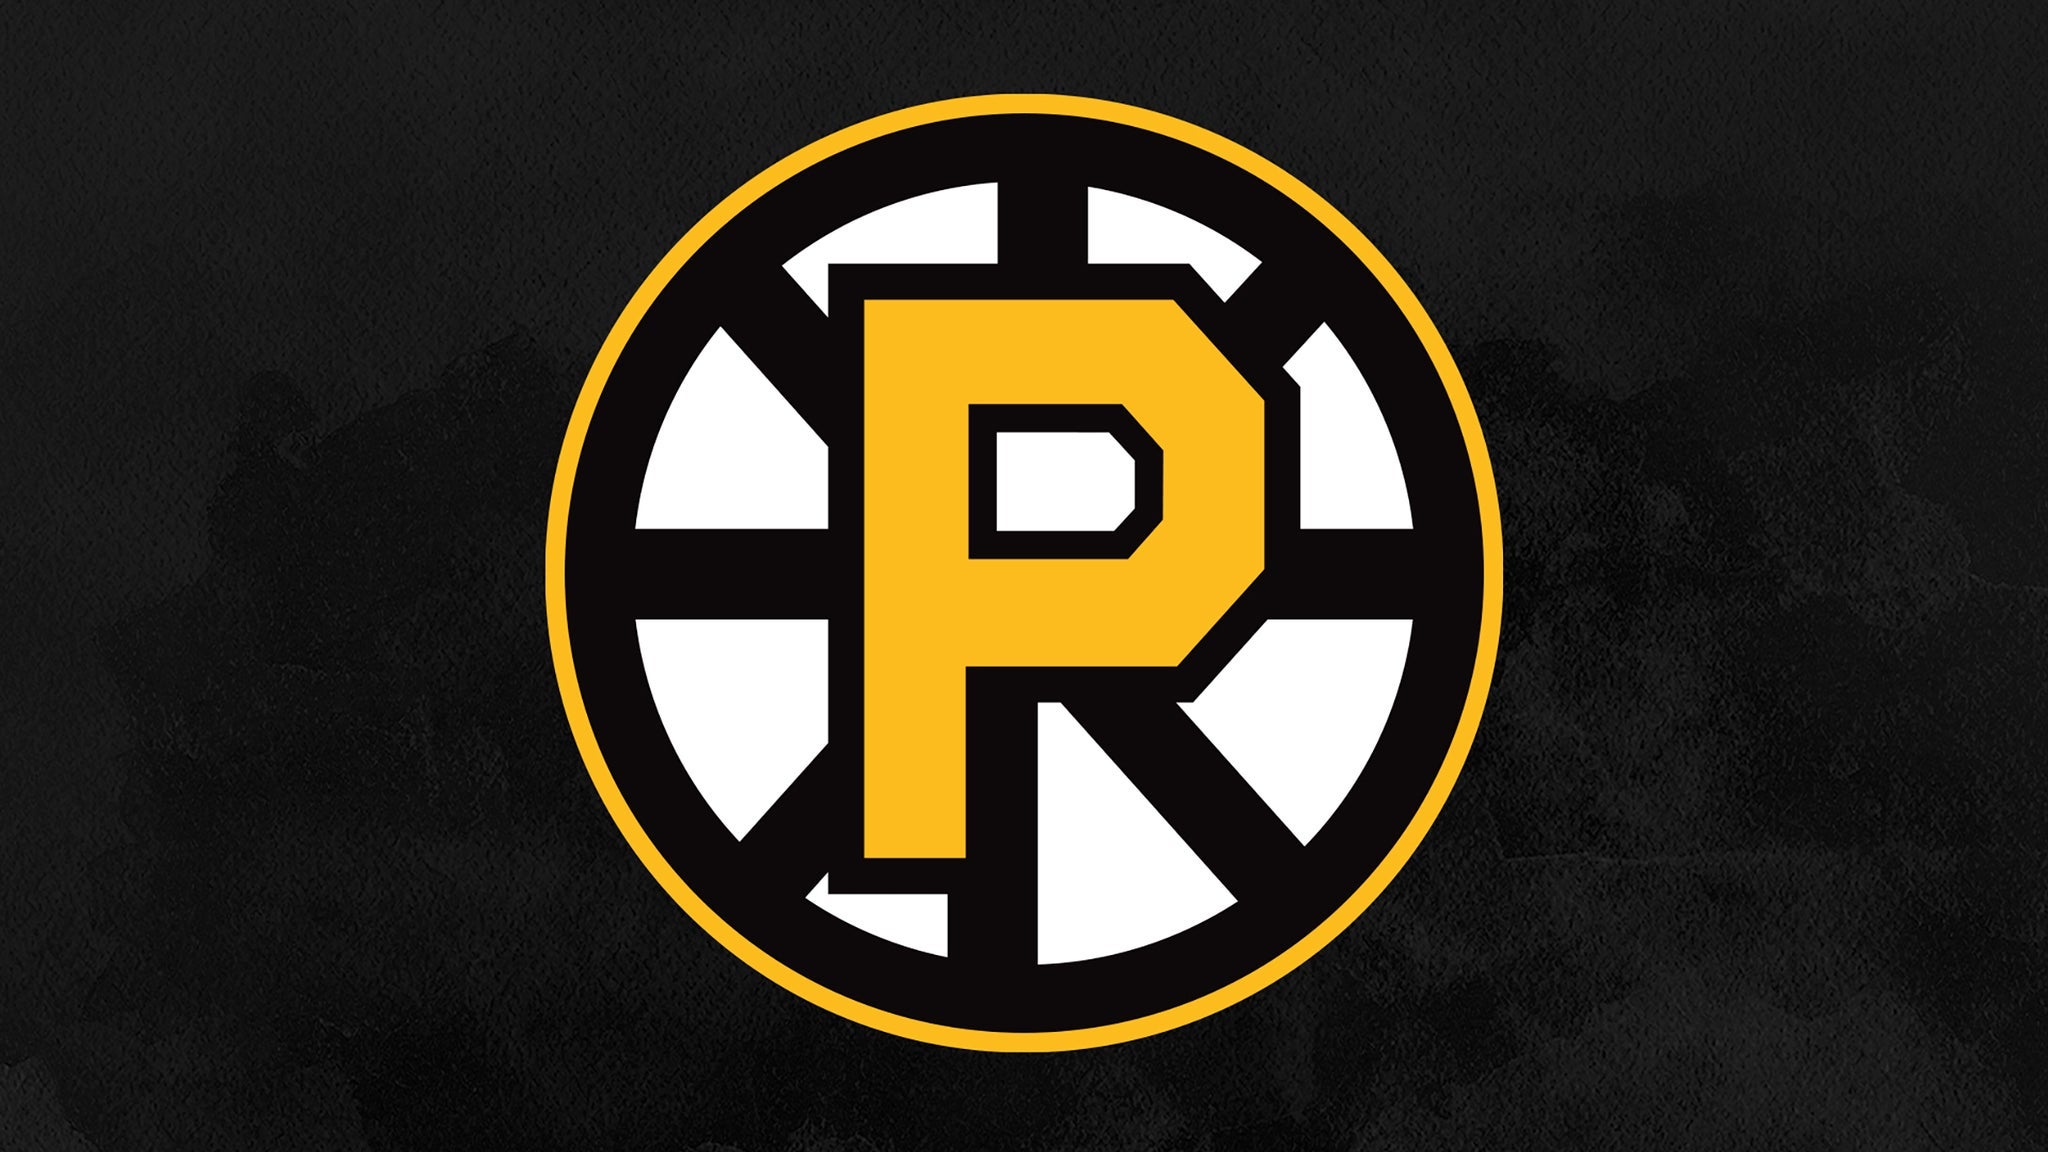 Providence Bruins vs. Lehigh Valley Phantoms - Providence, RI 02903